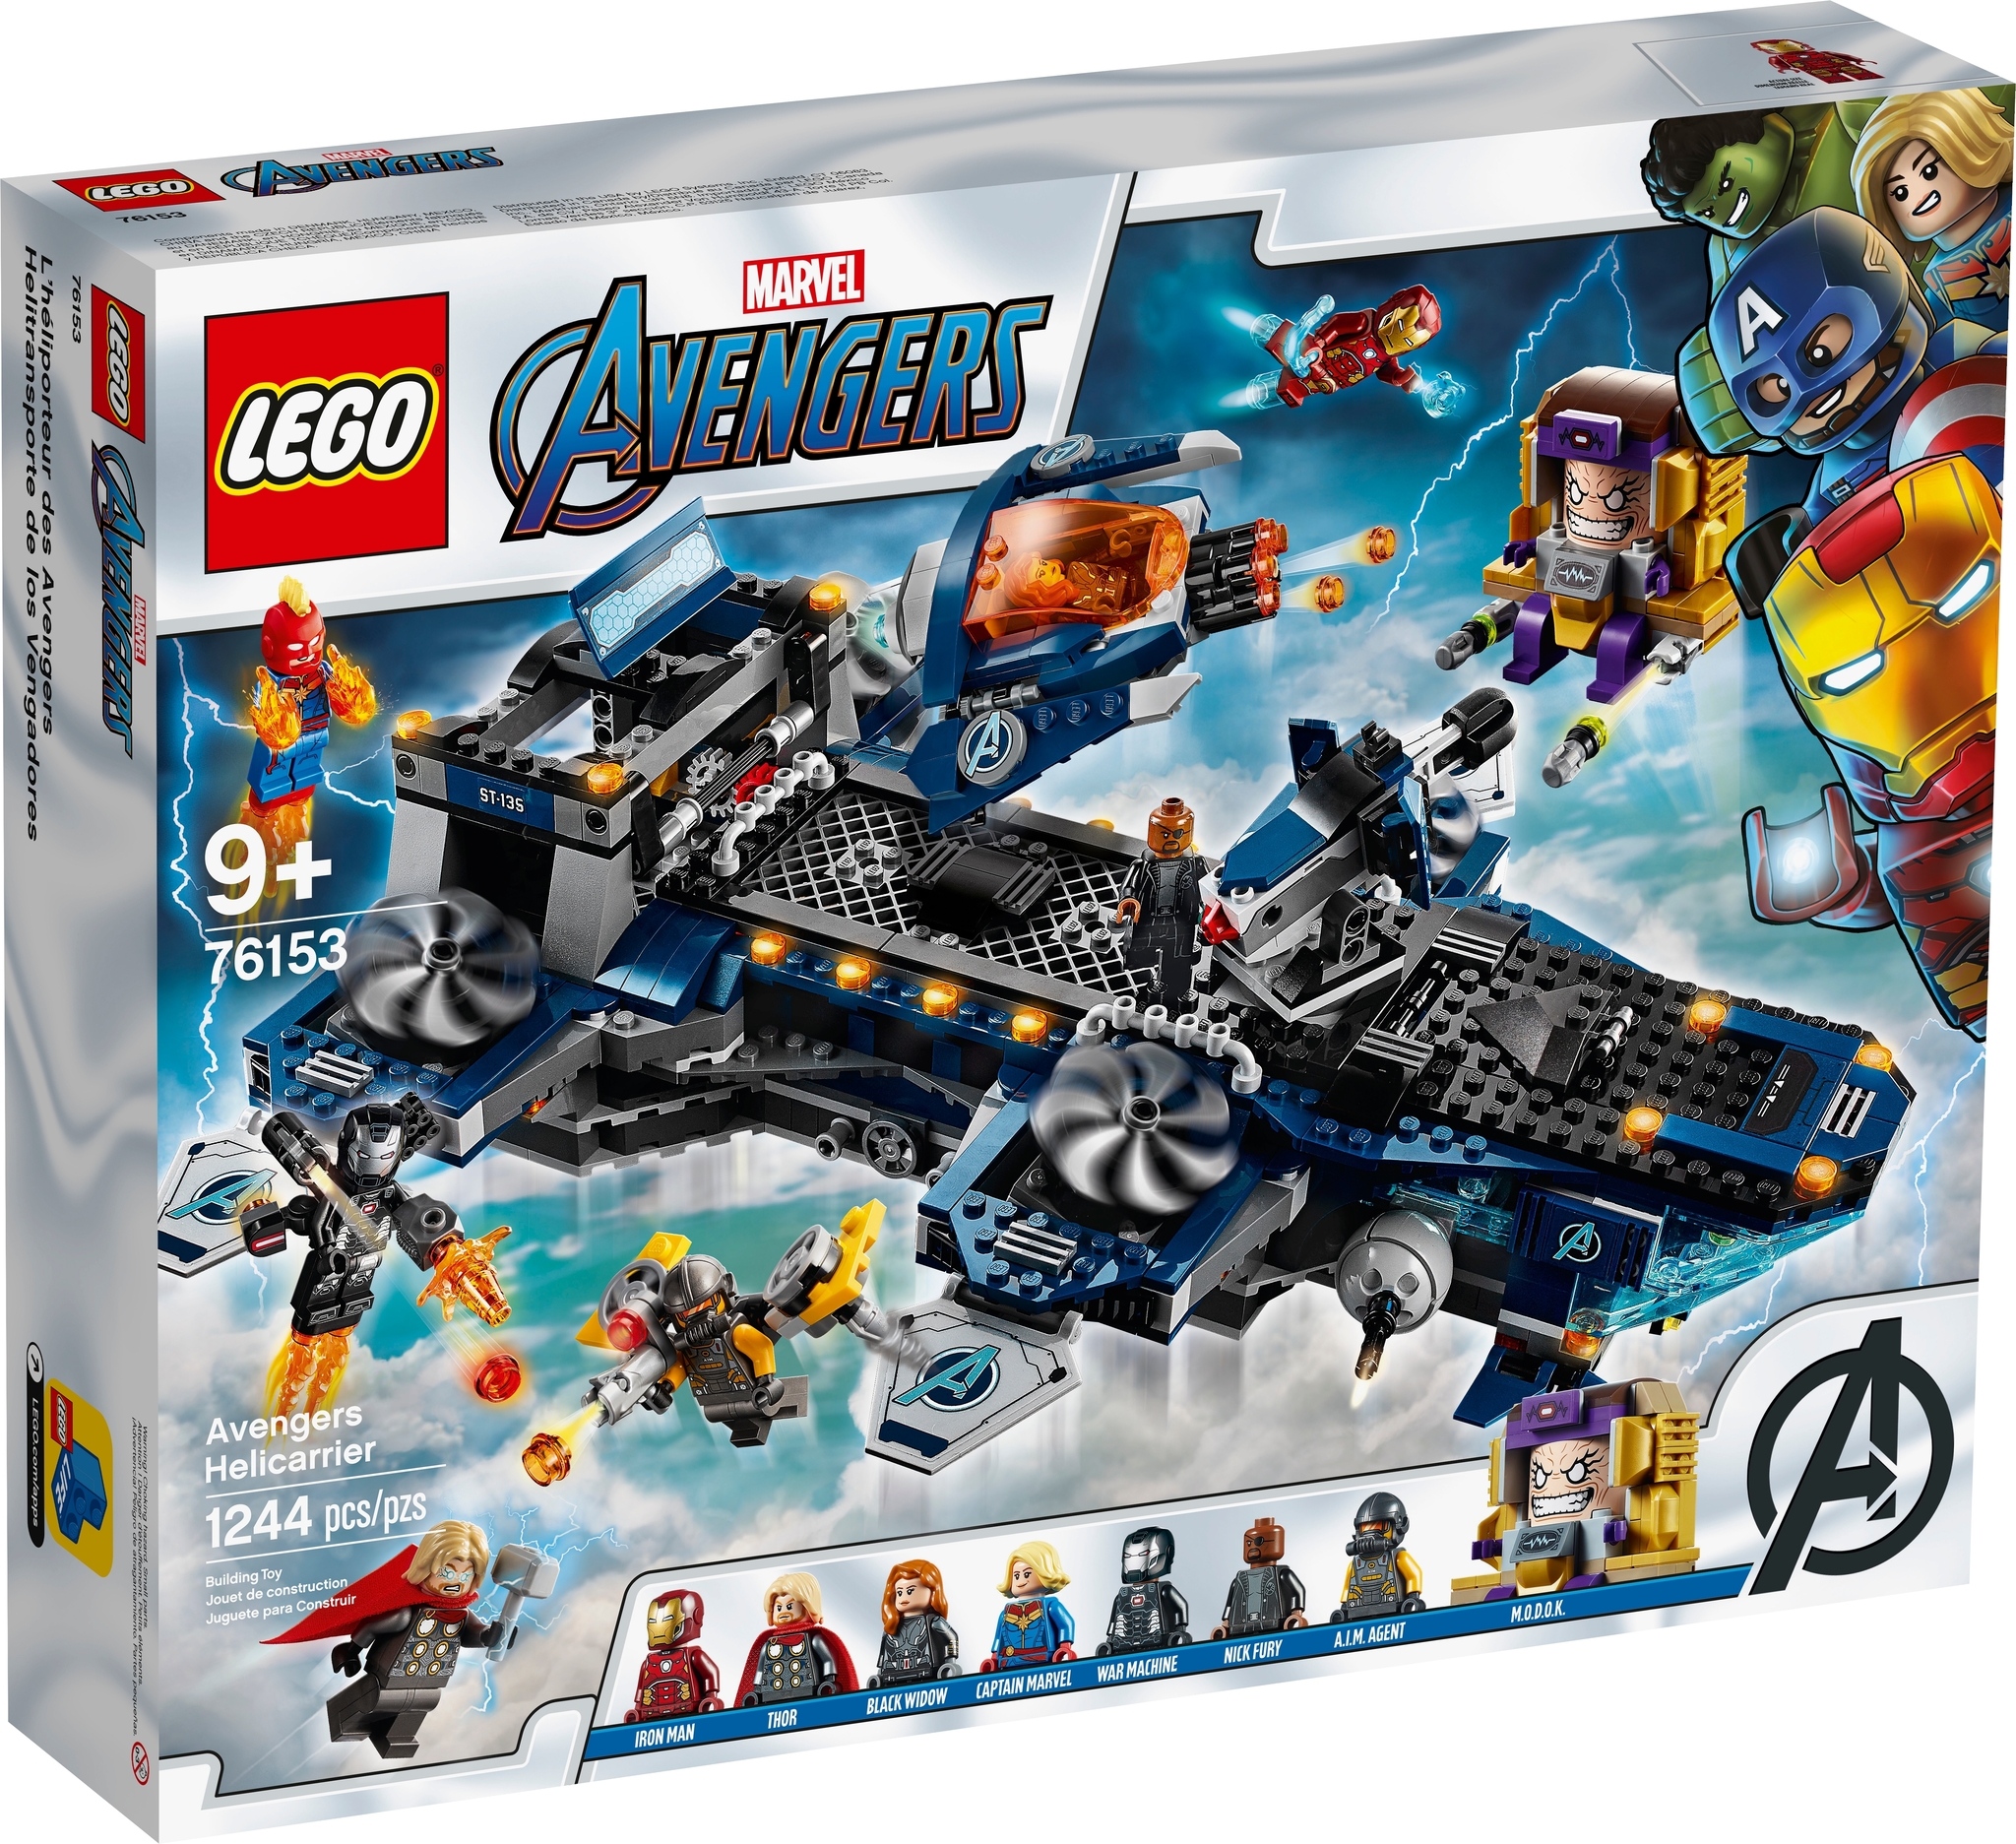 Thor /& Captain Marvel LEGO 76153 Super Heroes Marvel Avengers Super Heroes Serie Helicarrier Spielzeug mit Iron Man